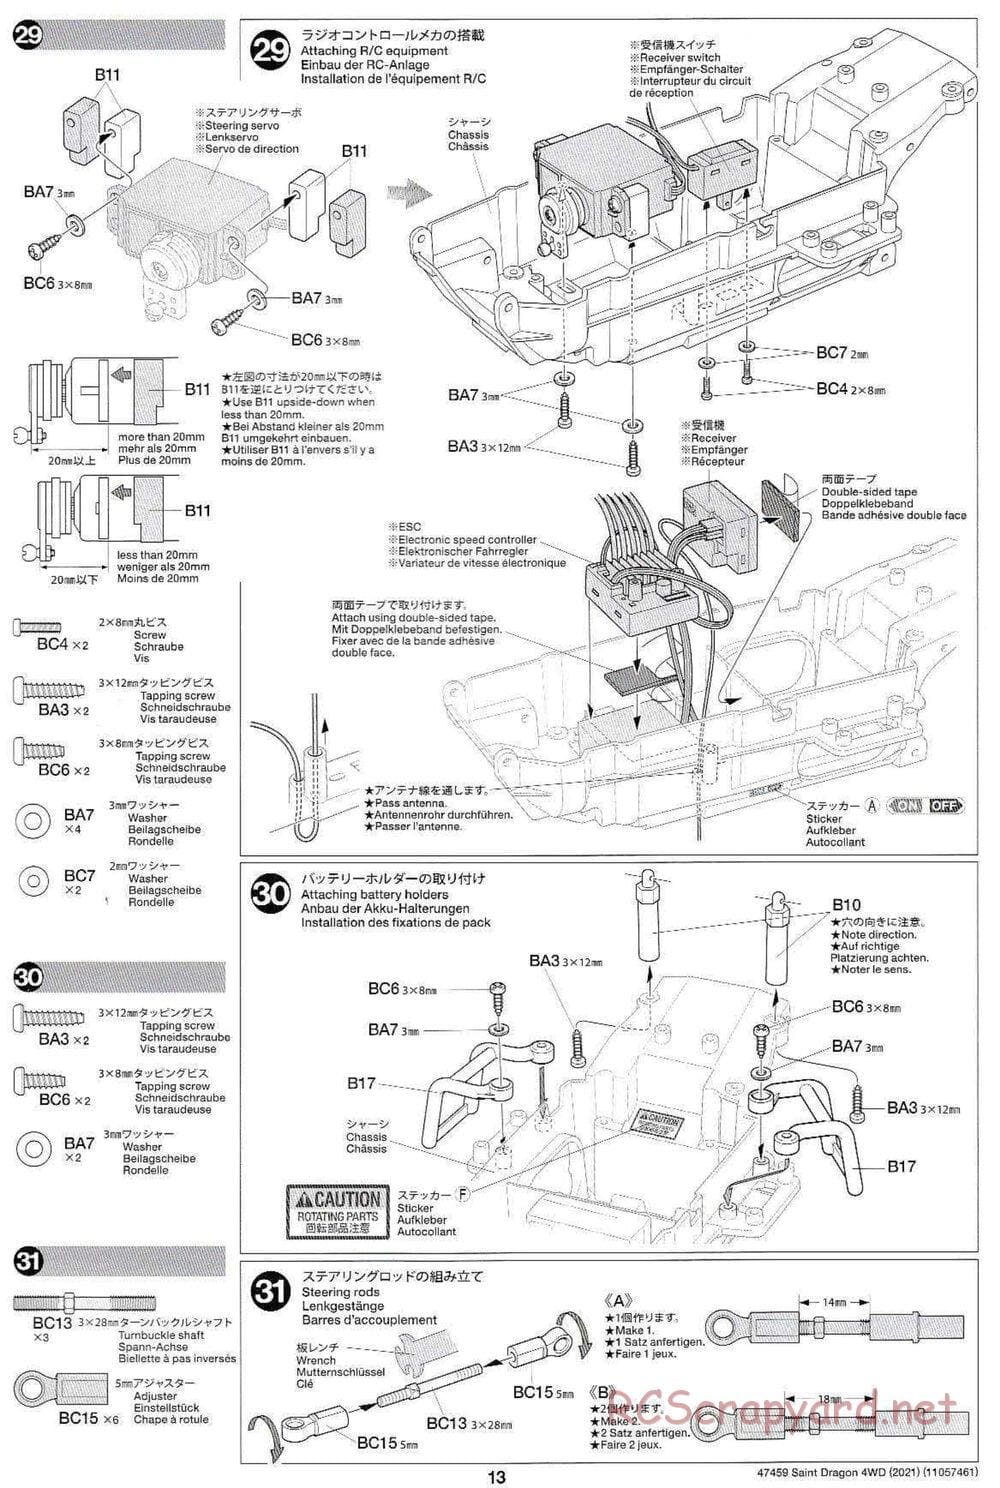 Tamiya - Saint Dragon (2021) Chassis - Manual - Page 13